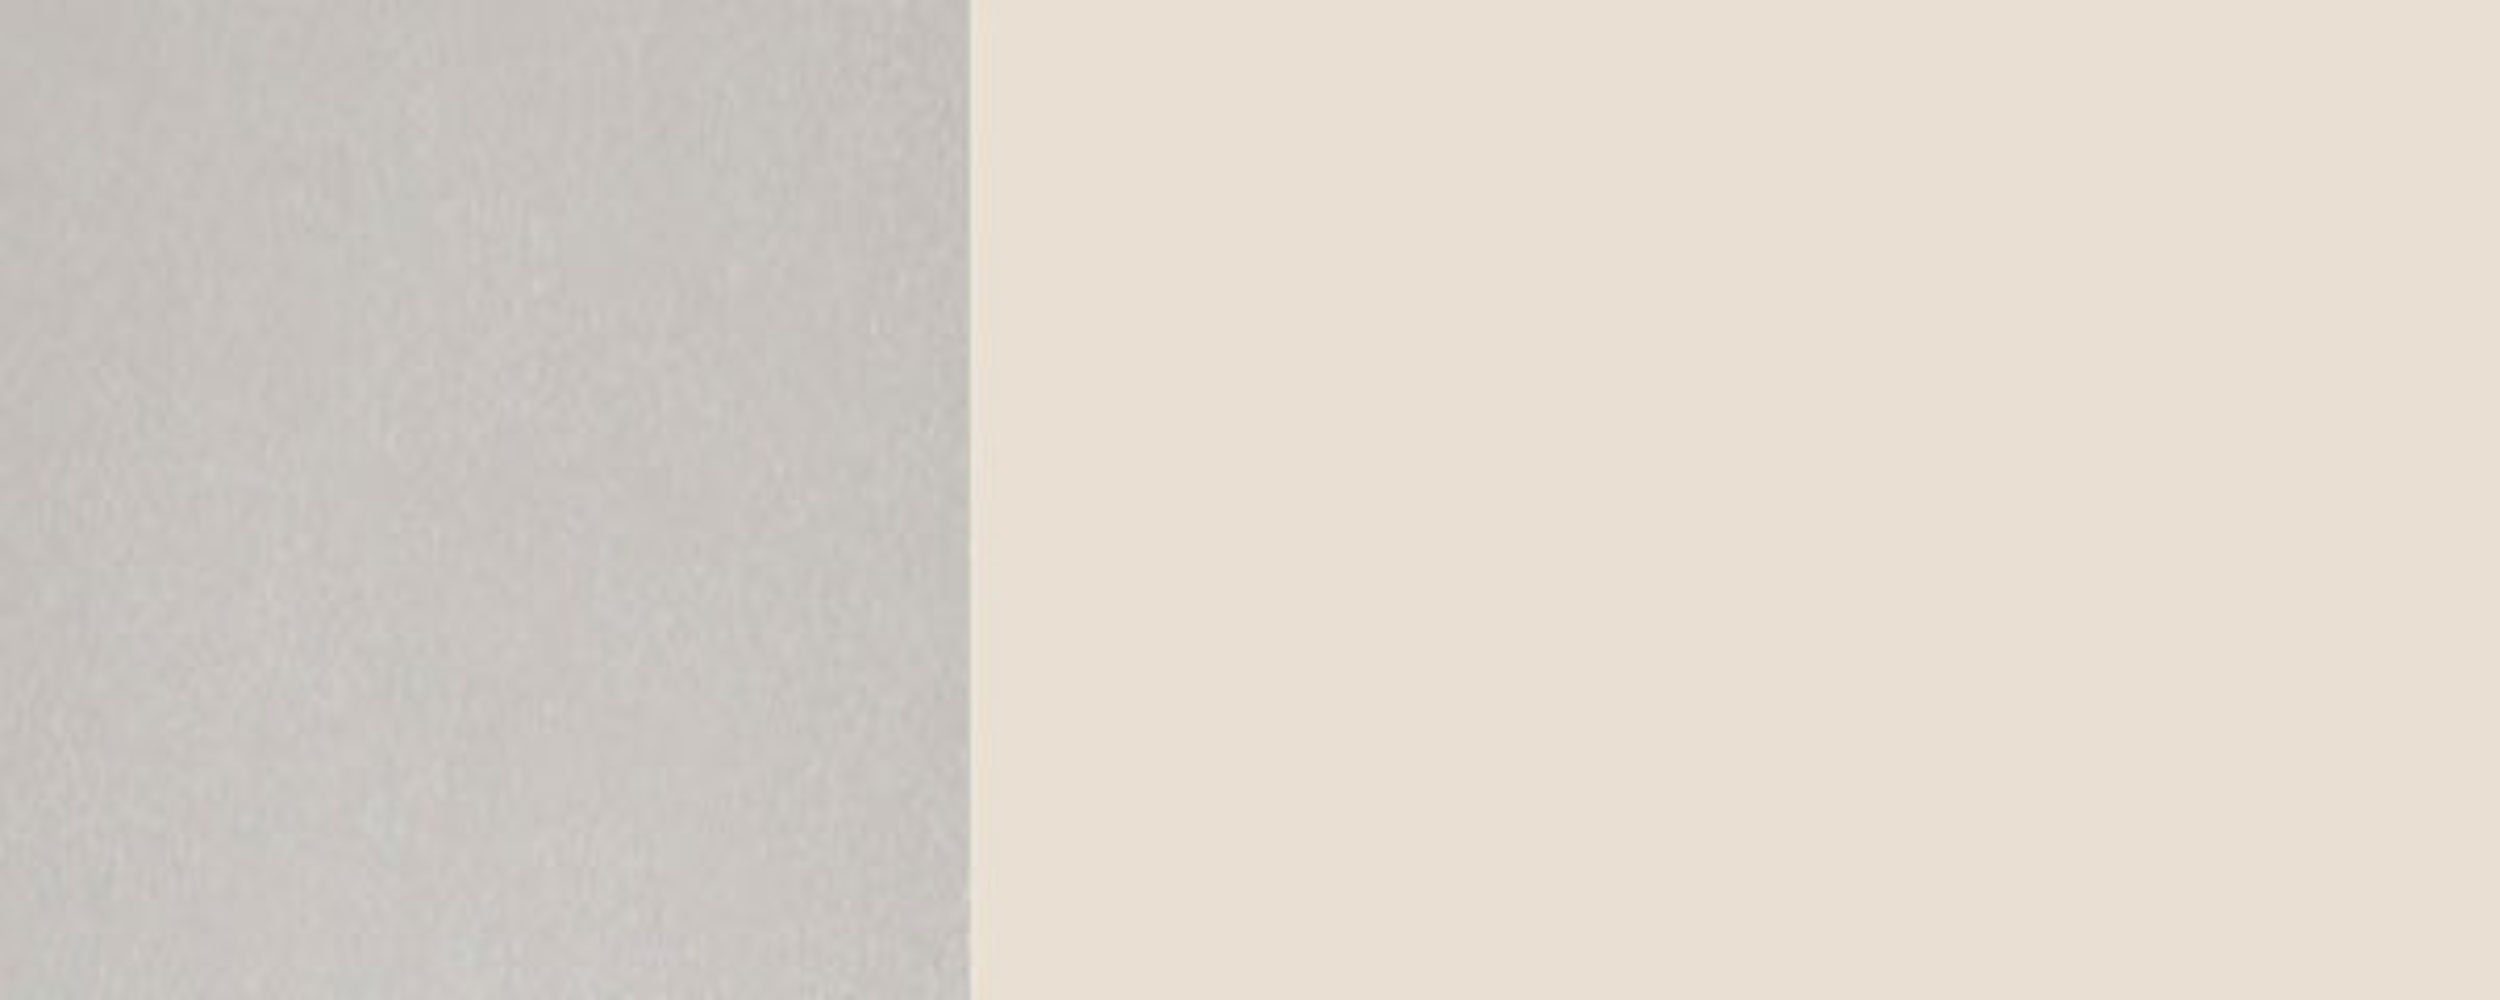 1-türig mit Feldmann-Wohnen RAL & (Tivoli) Ausführung matt Front-, wählbar 15cm 9001 Tivoli Korbeinsatz Korpusfarbe cremeweiß Unterschrank